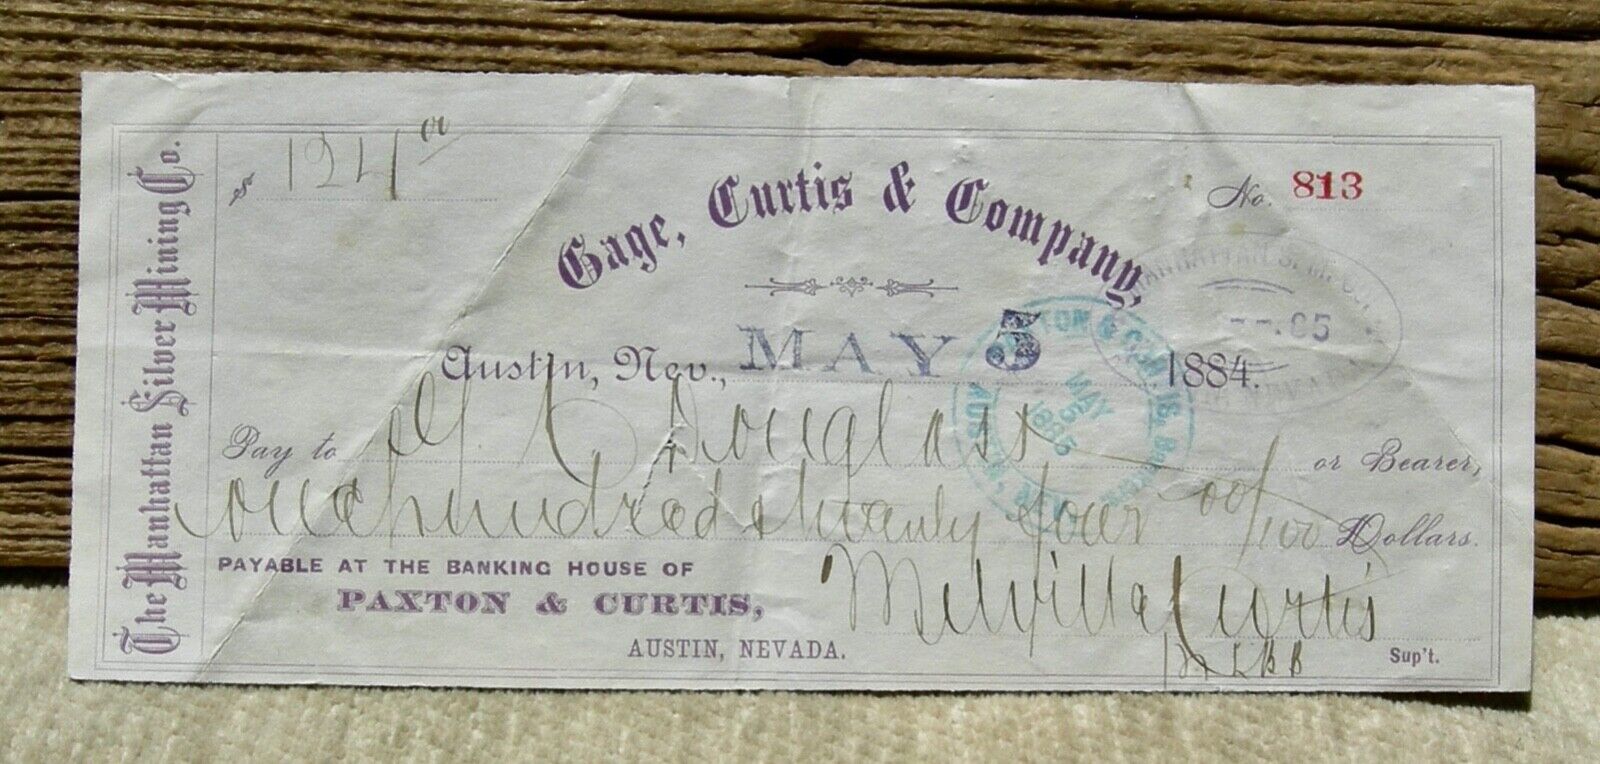 Ca 1884 Austin Nevada (lander Co Mining) "manhattan Silver Mining Co" Mine Check